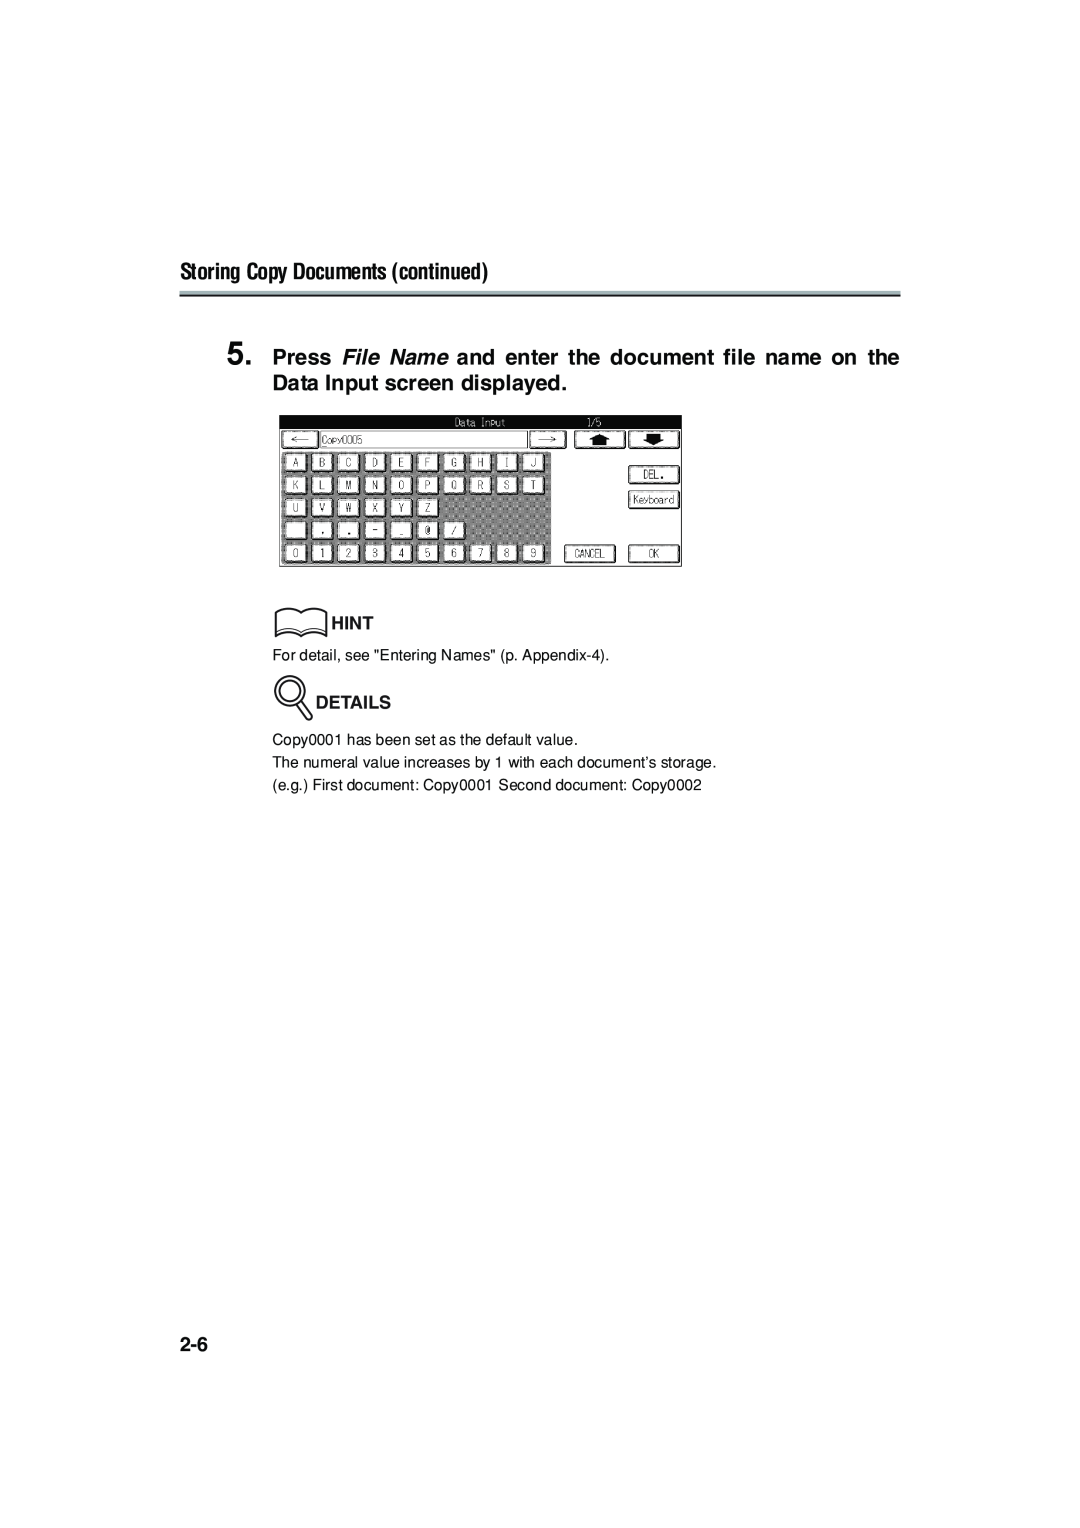 Konica Minolta 7222 manual Storing Copy Documents continued, Hint, Details, For detail, see Entering Names p. Appendix-4 